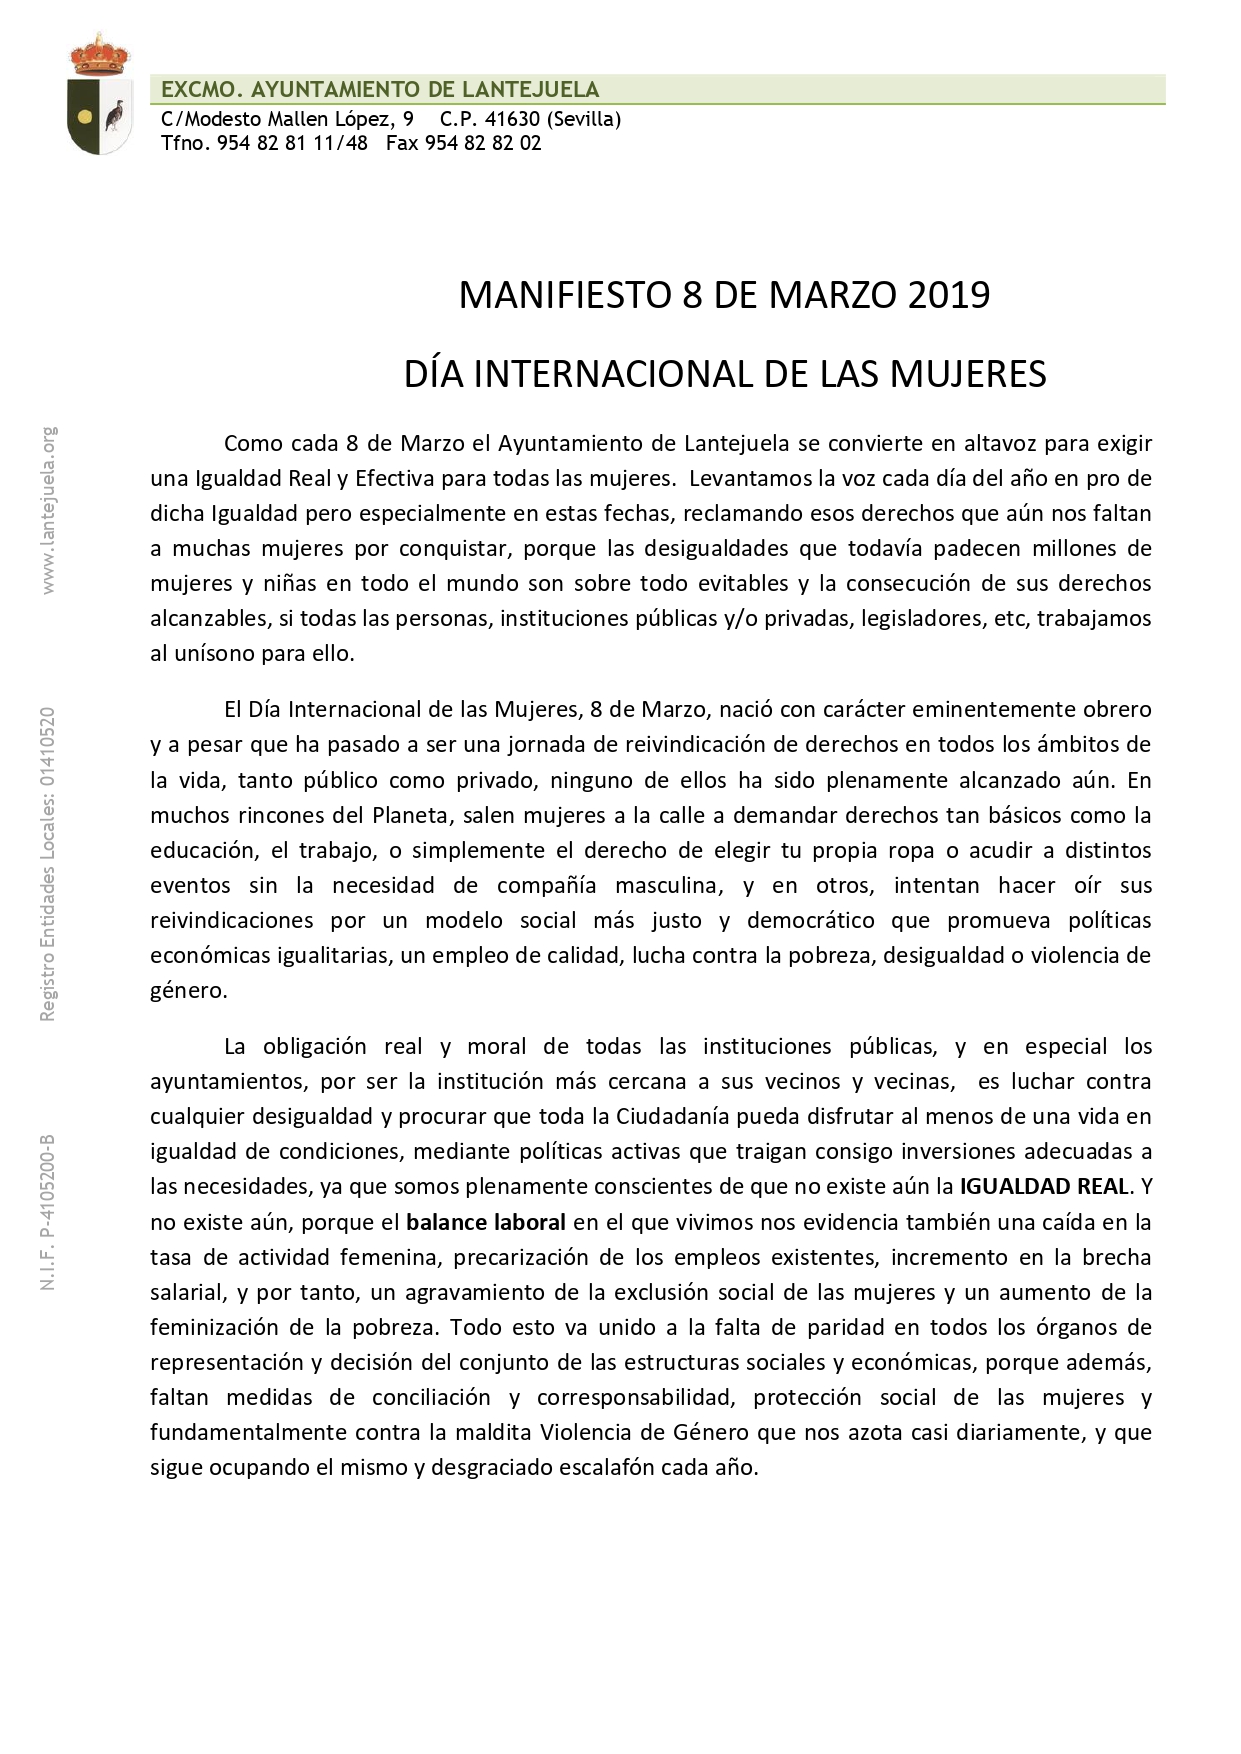 MANIFIESTO 8 DE MARZO 2019_pages-to-jpg-0001